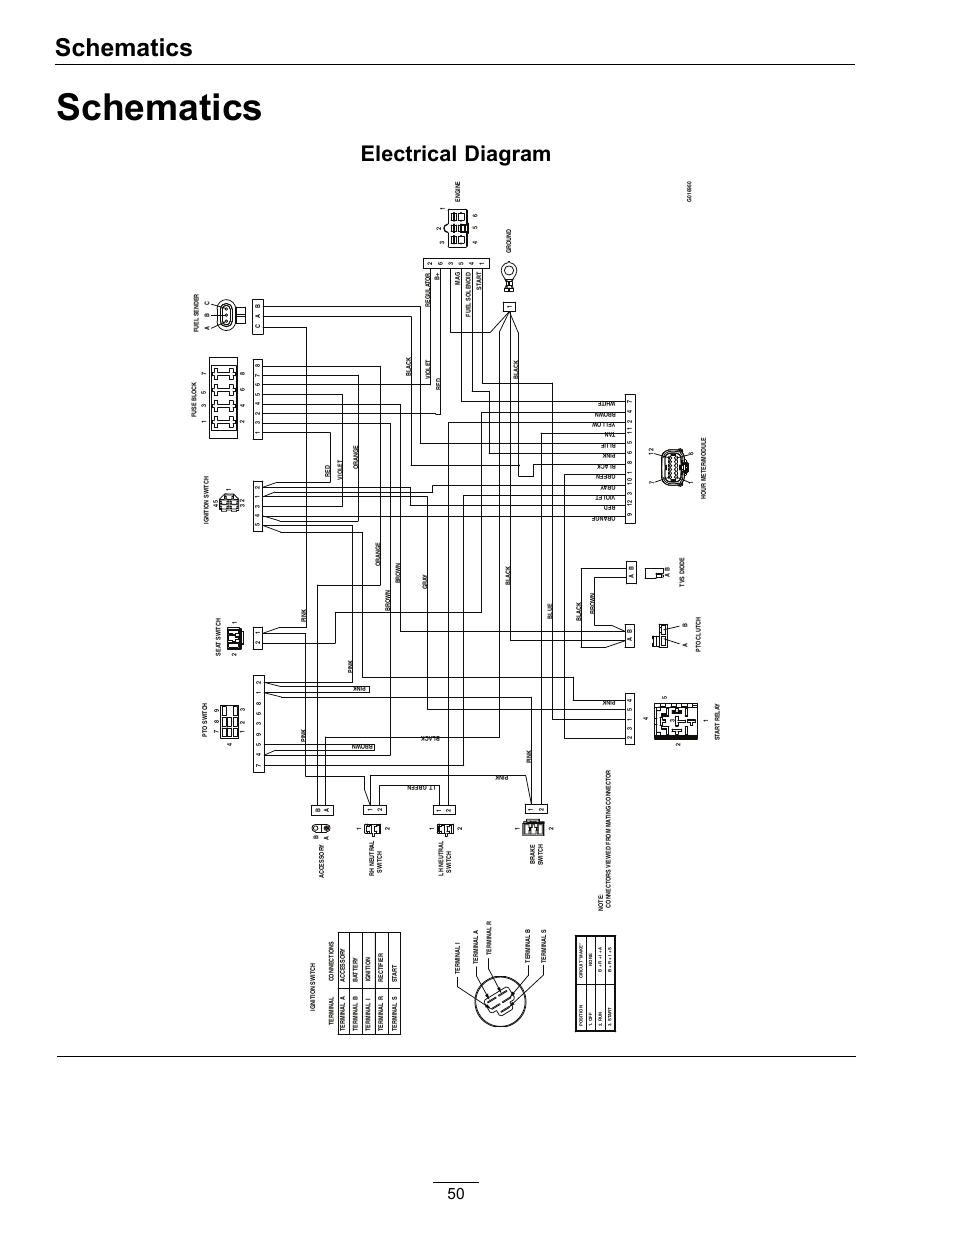 tmx 155 cdi wiring diagram